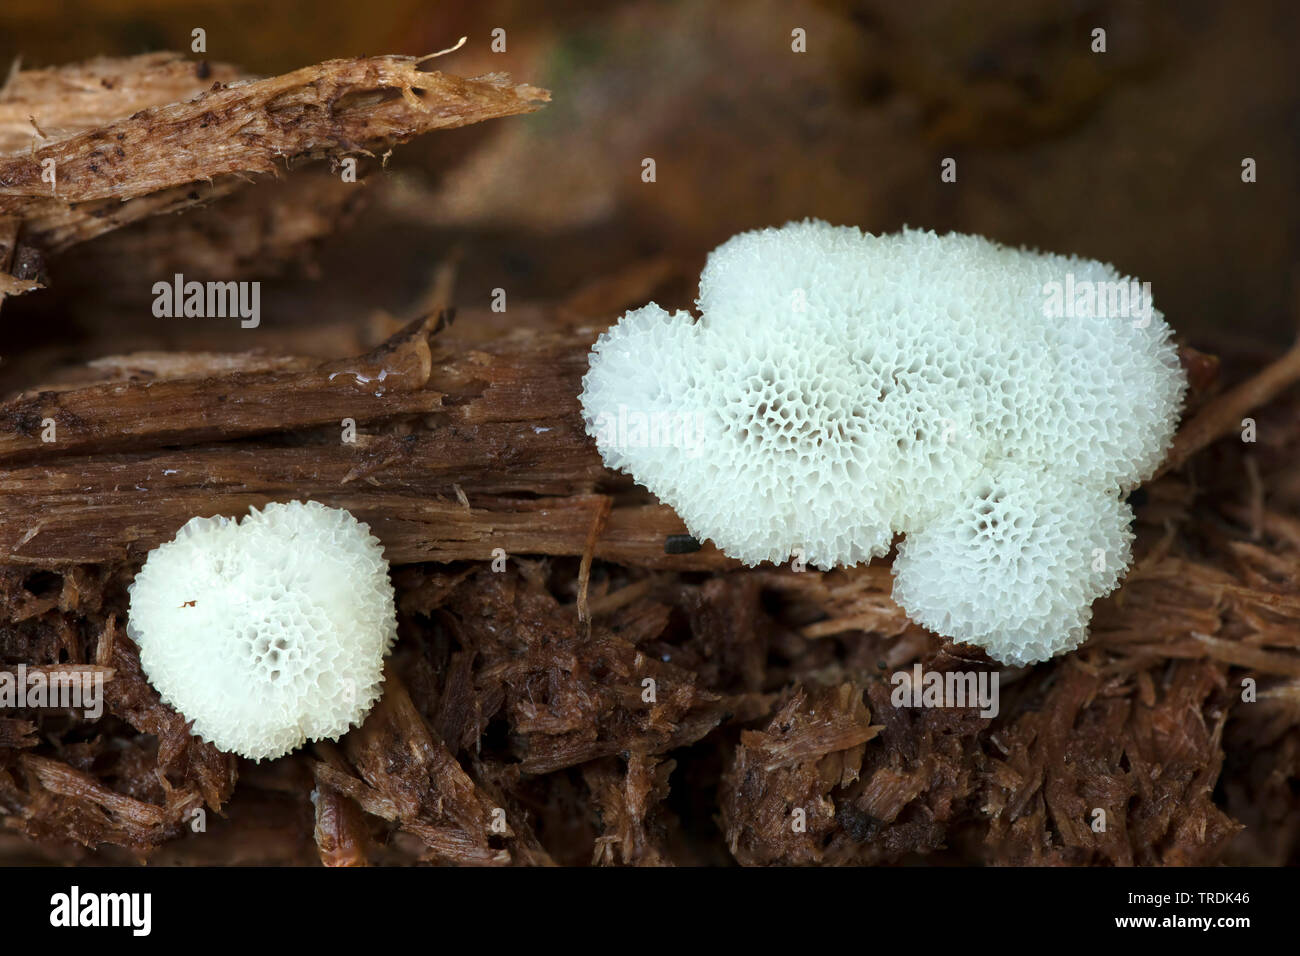 Coral slime mold (Ceratiomyxa fruticulosa), on dead wood, Netherlands Stock Photo